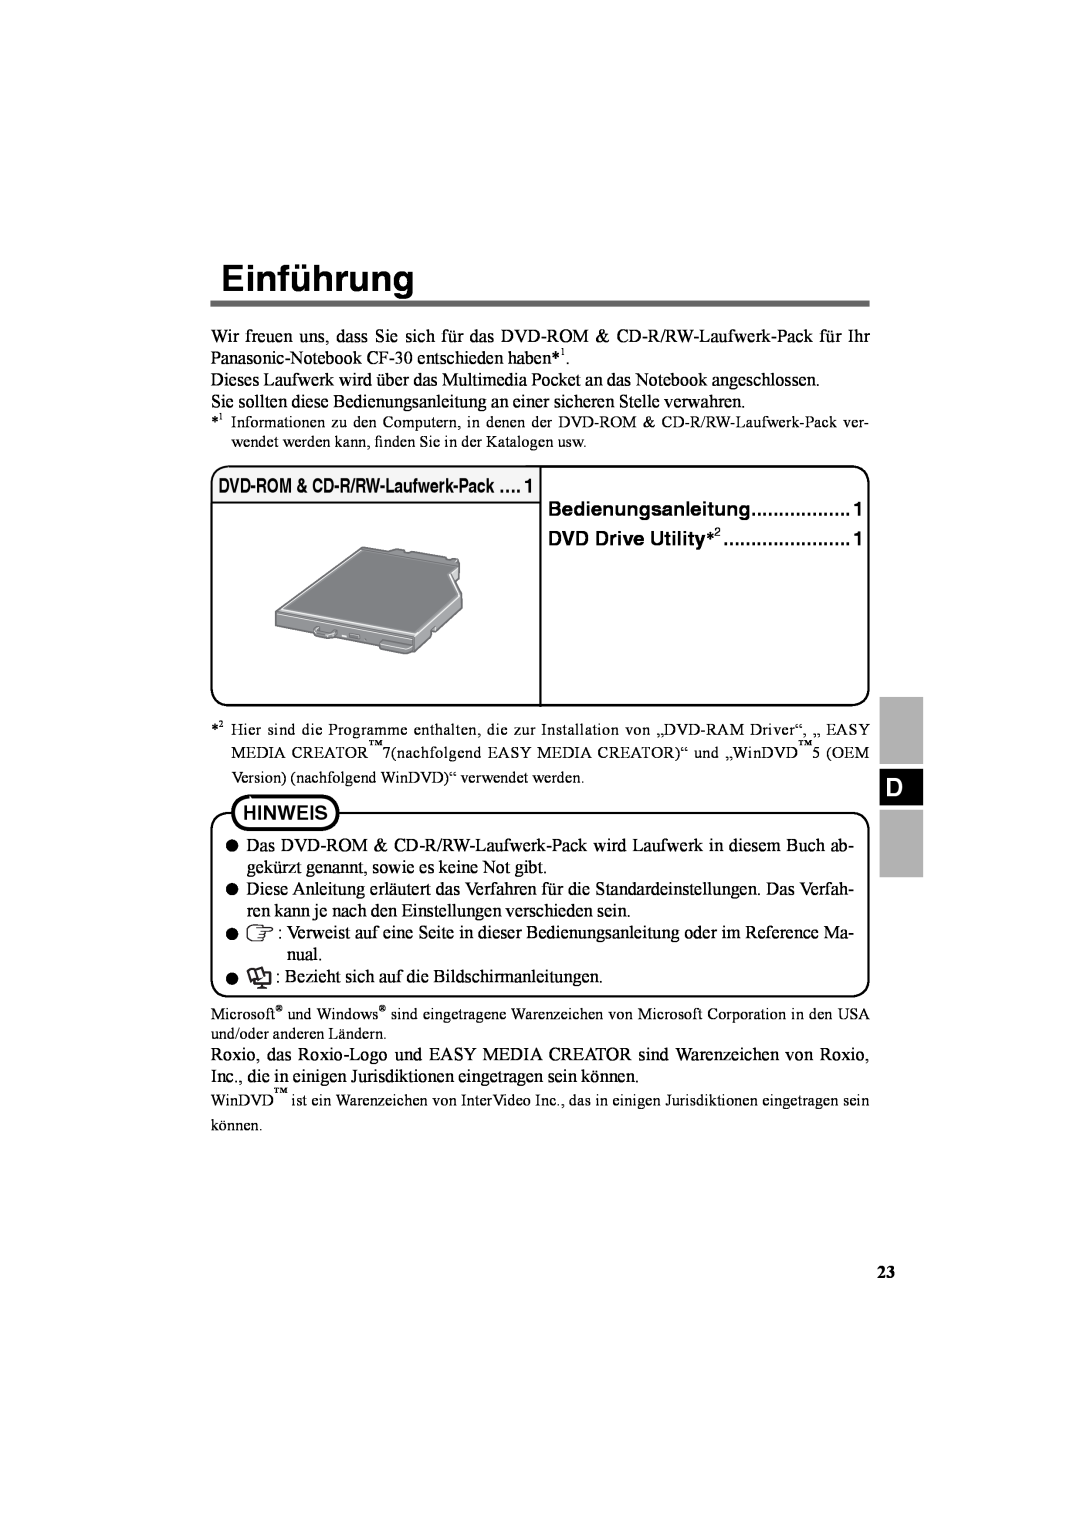 Panasonic CF-VDR301U Einführung, DVD-ROM & CD-R/RW-Laufwerk-Pack, Bedienungsanleitung, Hinweis, DVD Drive Utility 